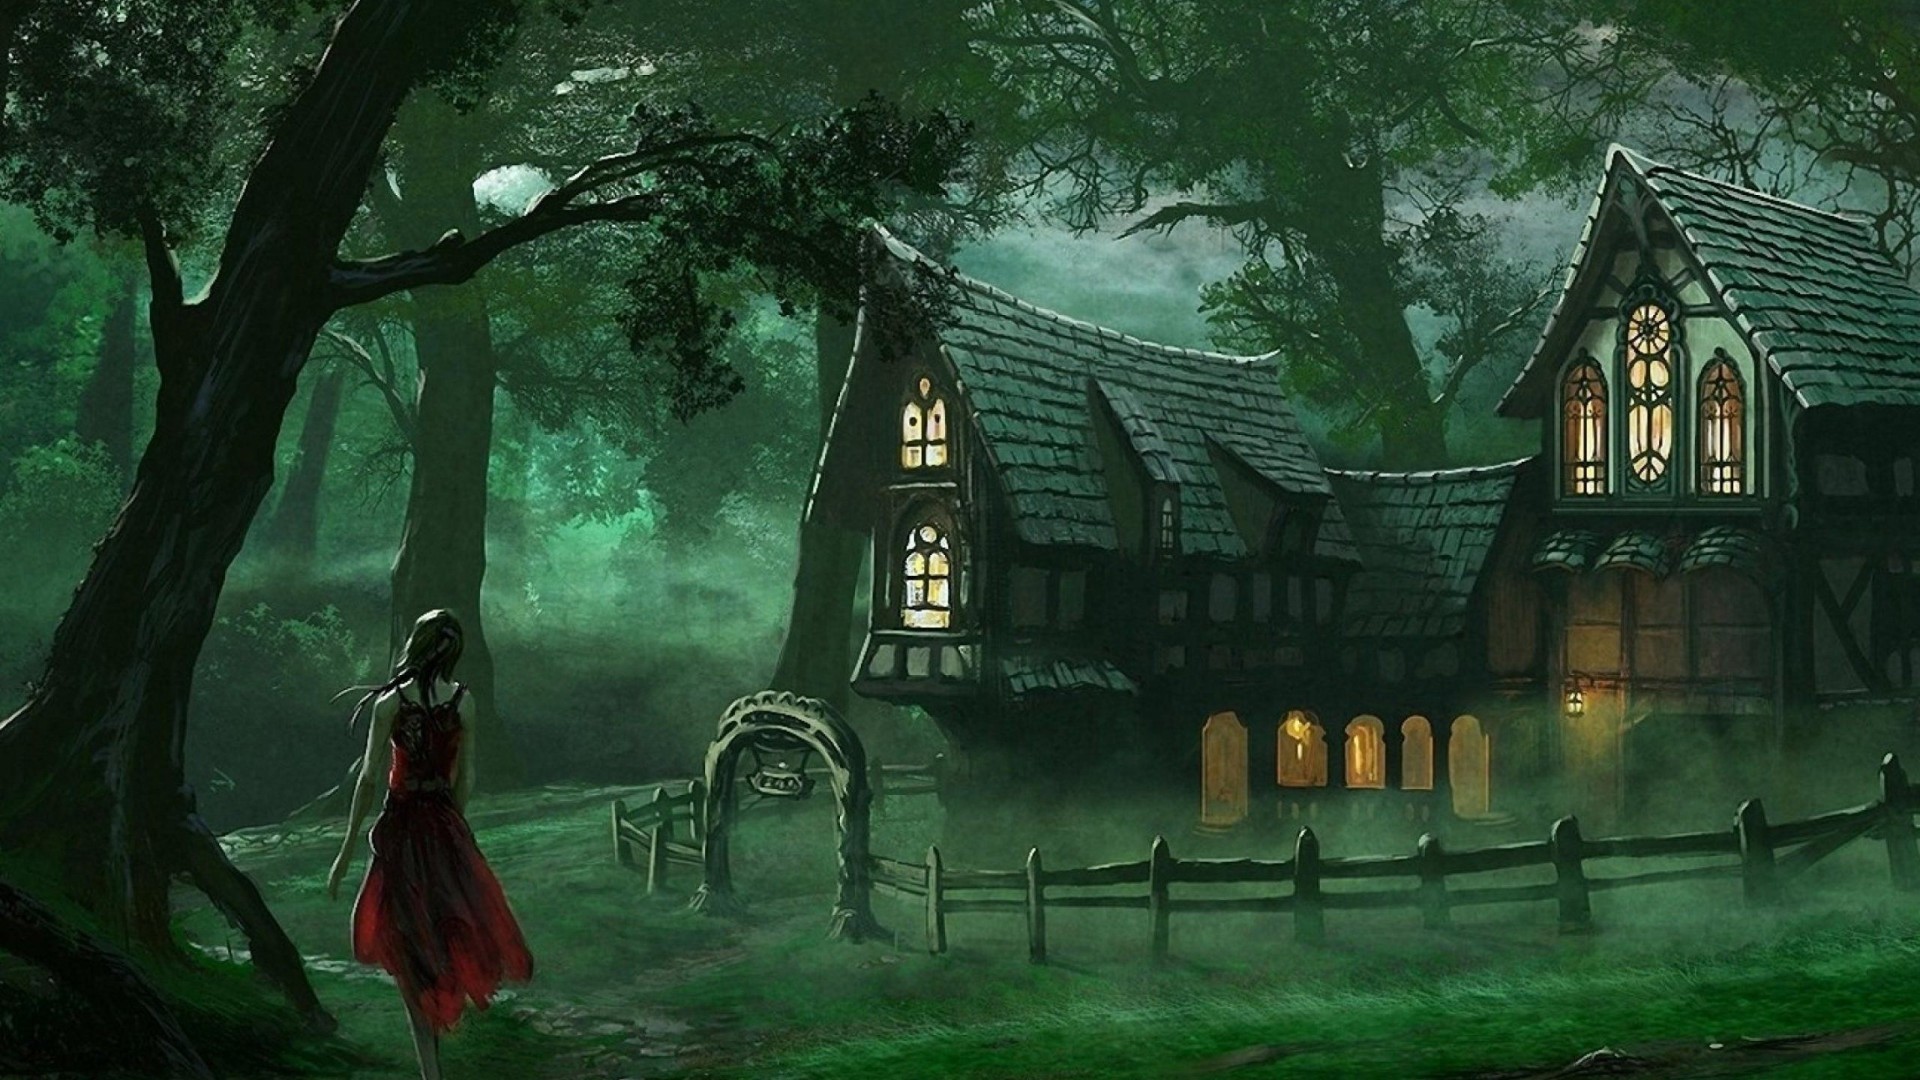 Spooky House Fantasy Forest wallpaper HD 1920 1080